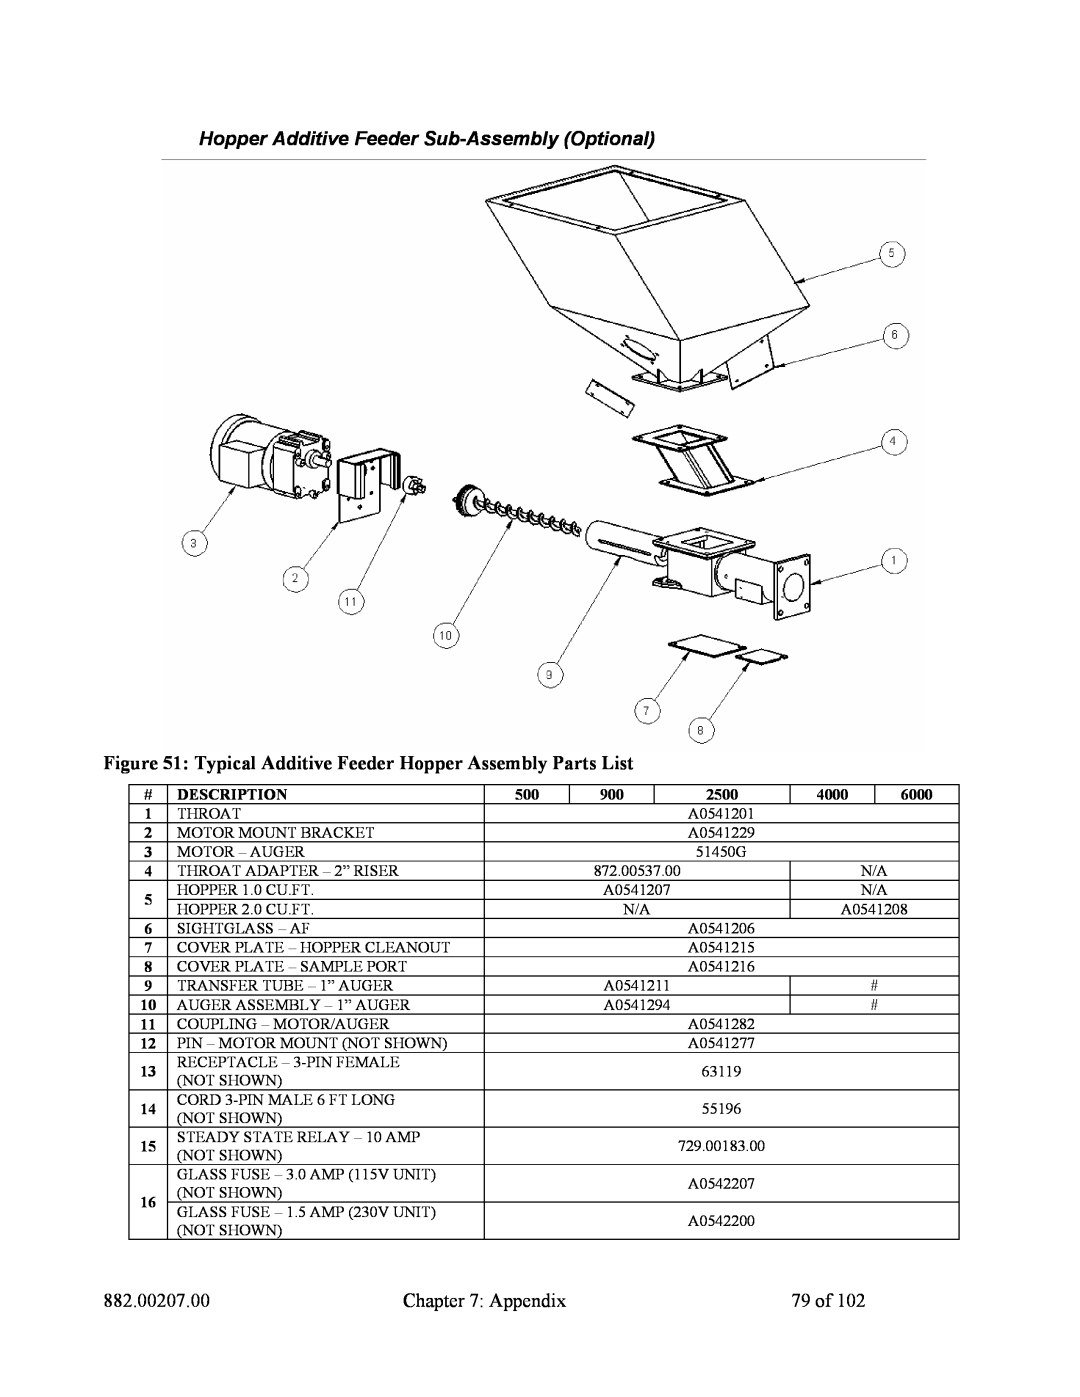 Mitsubishi Electronics 882.00207.00 specifications Hopper Additive Feeder Sub-AssemblyOptional, Appendix, 79 of 